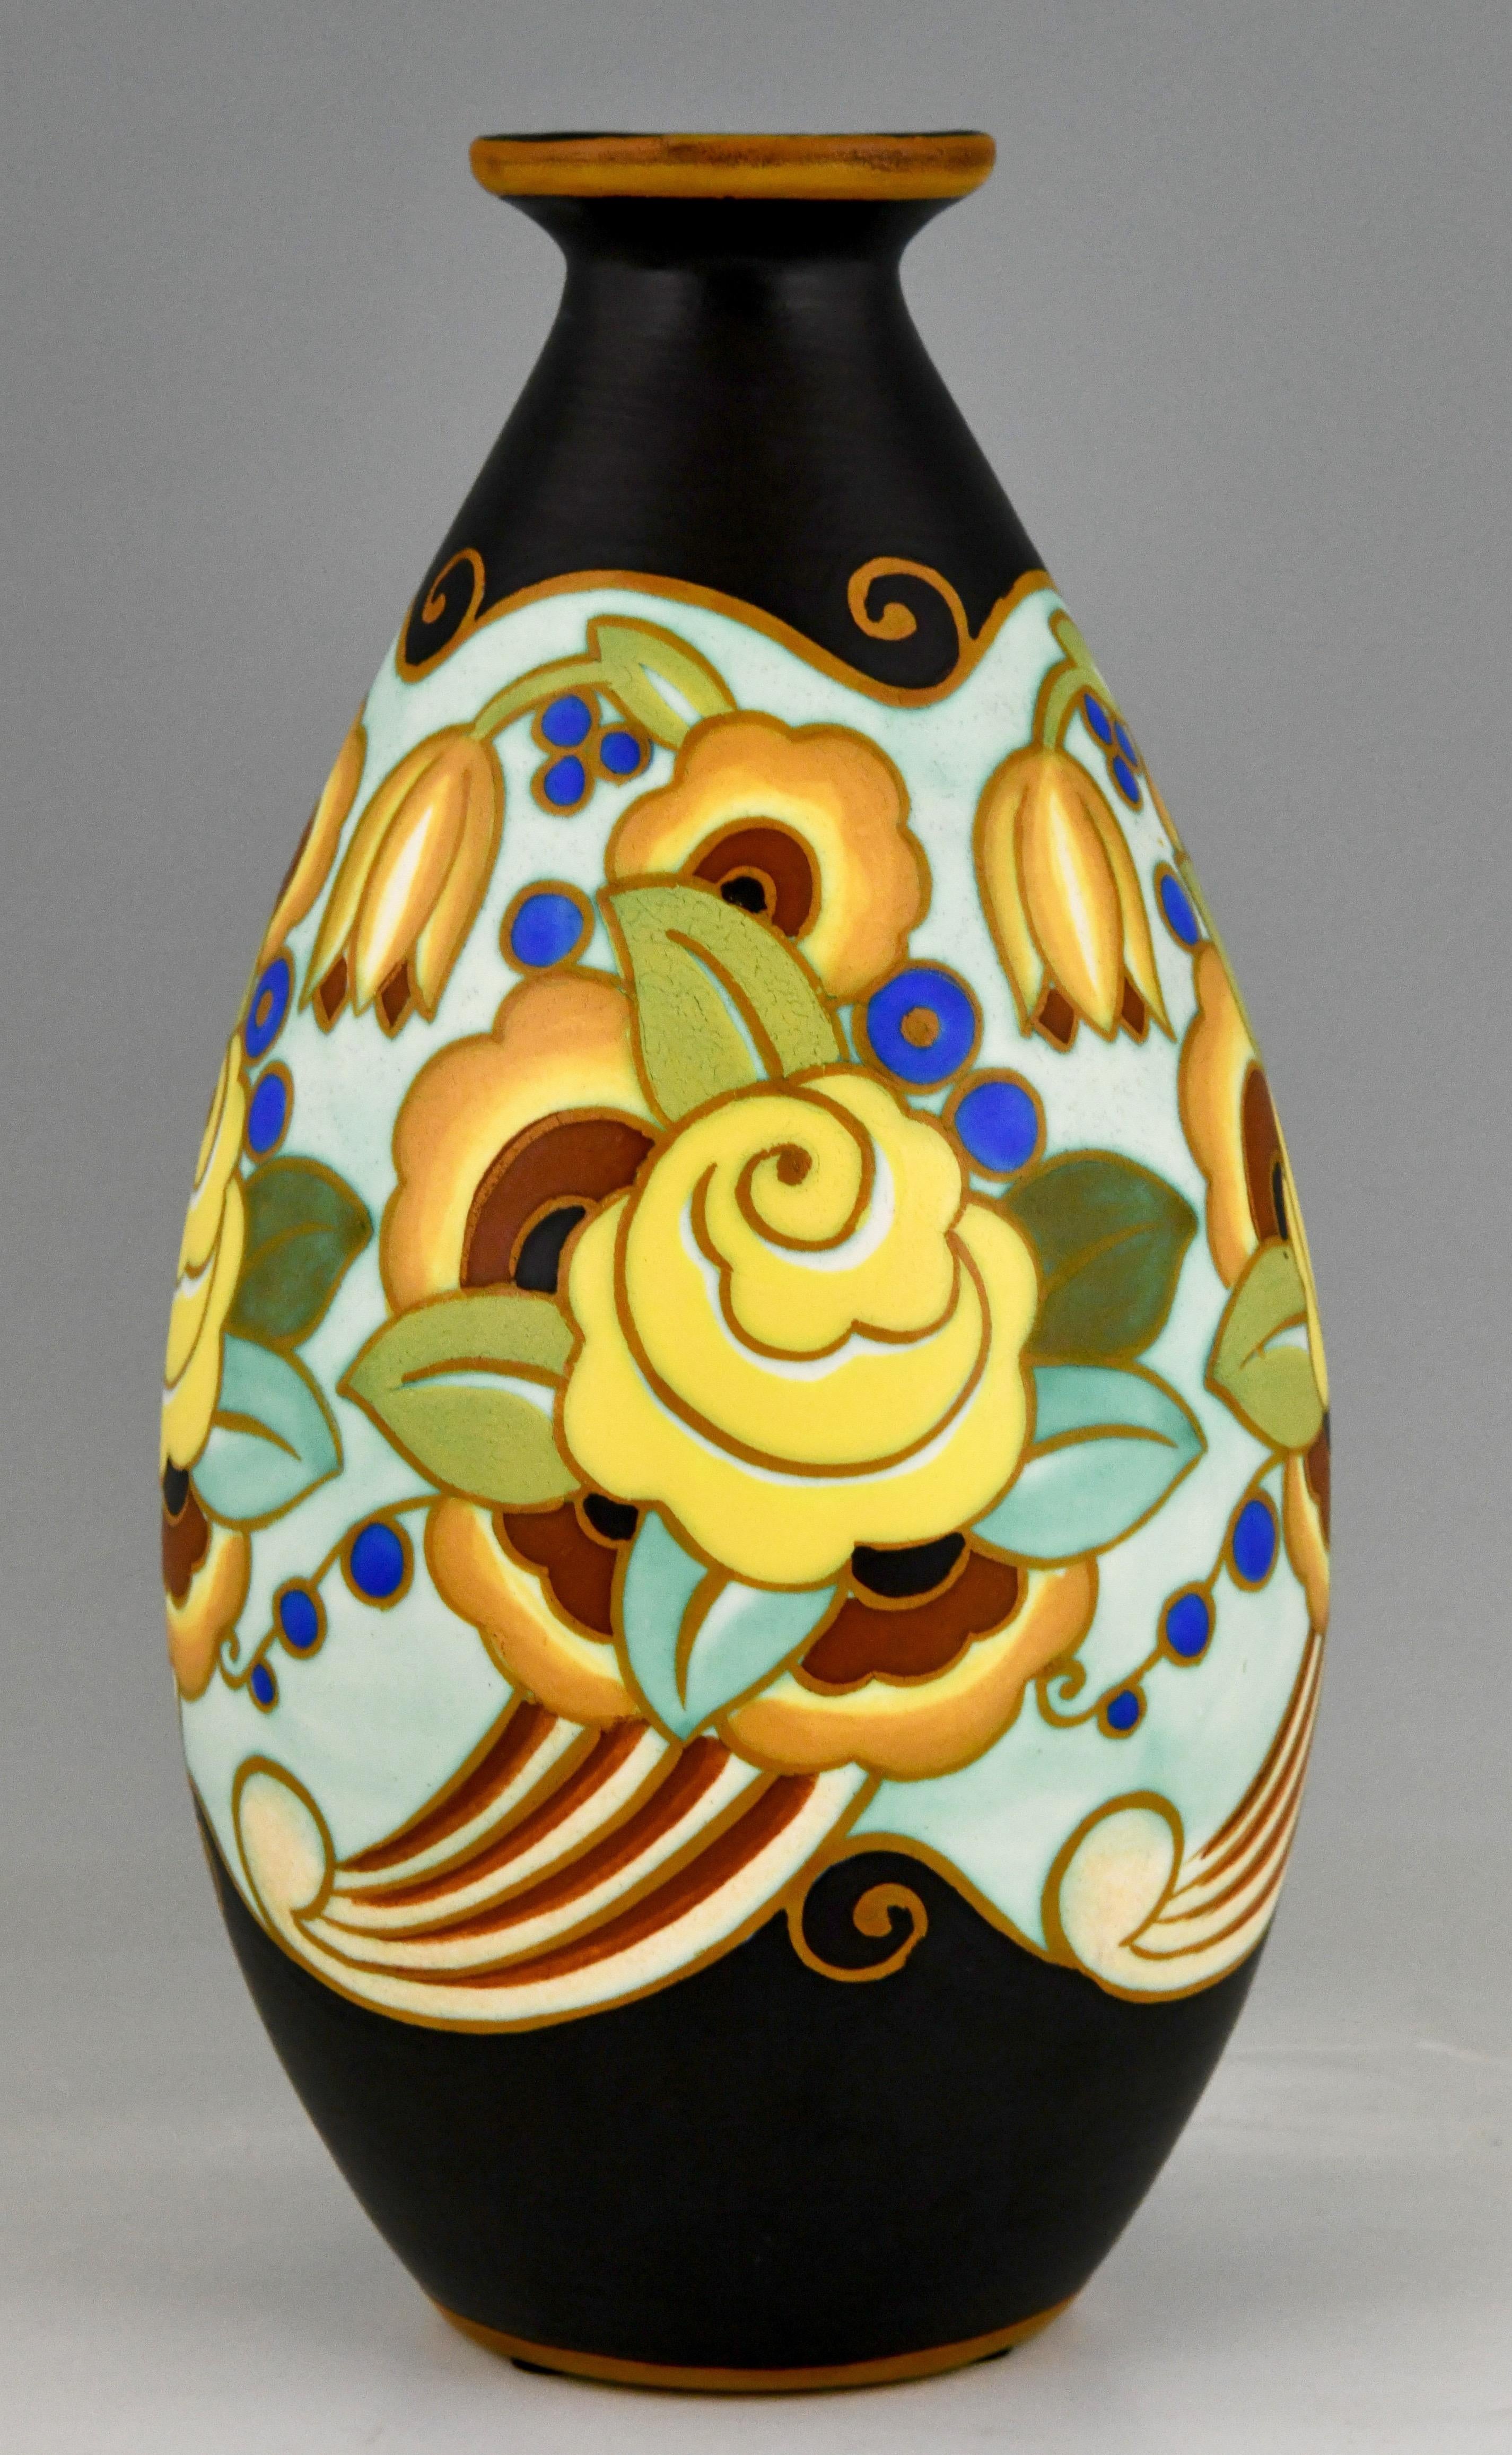 Belgian Pair of Art Deco Ceramic Vases with Flowers by Boch Frères Keramis Belgium, 1931